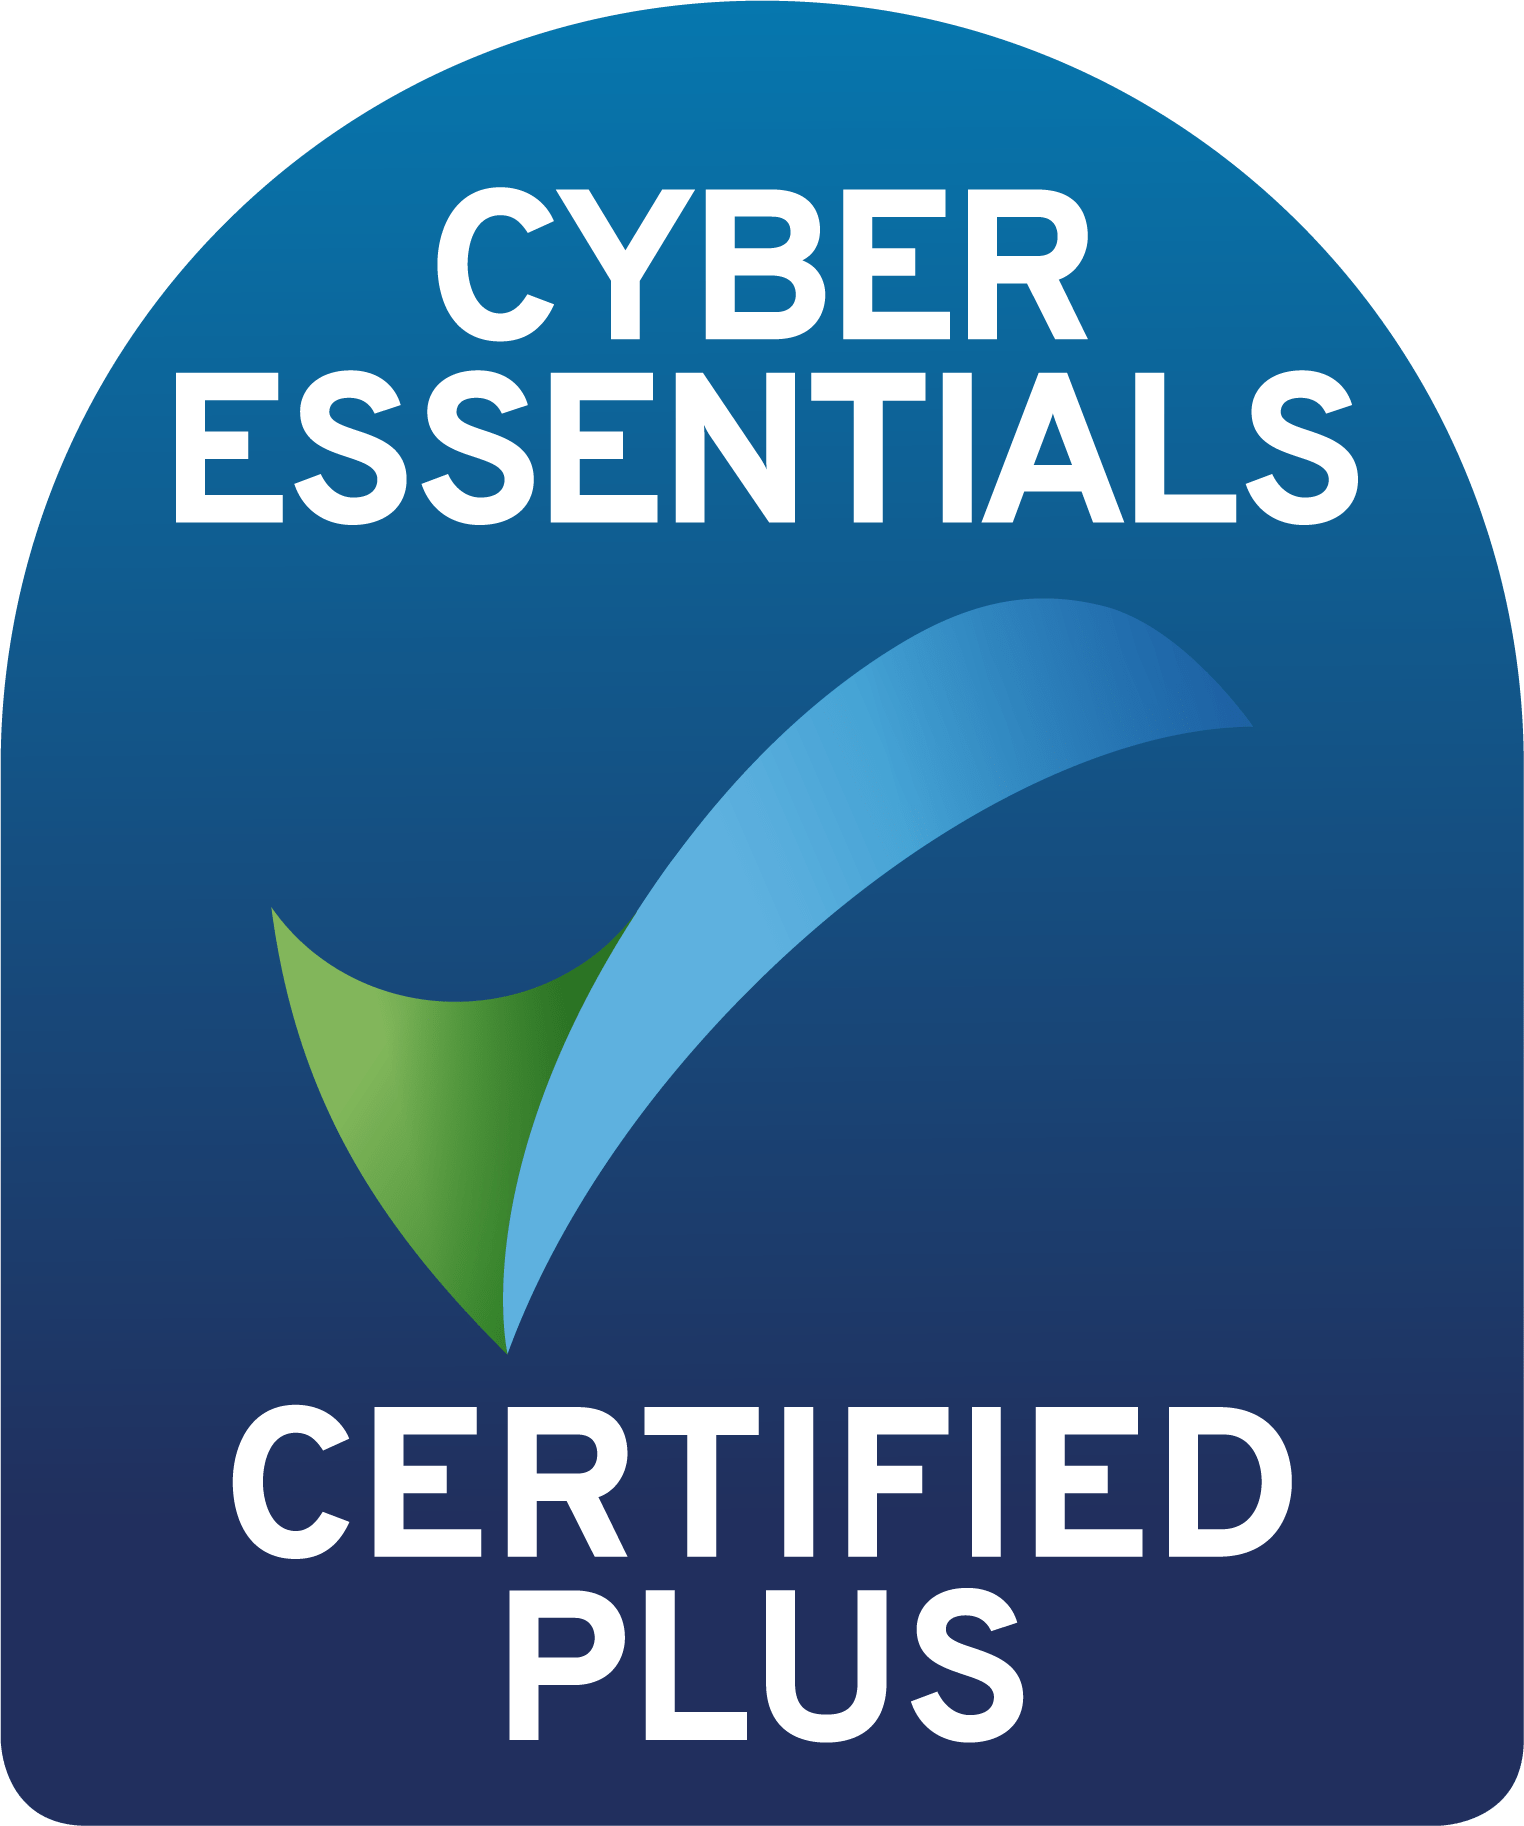 Cyberessentials Certification Plus